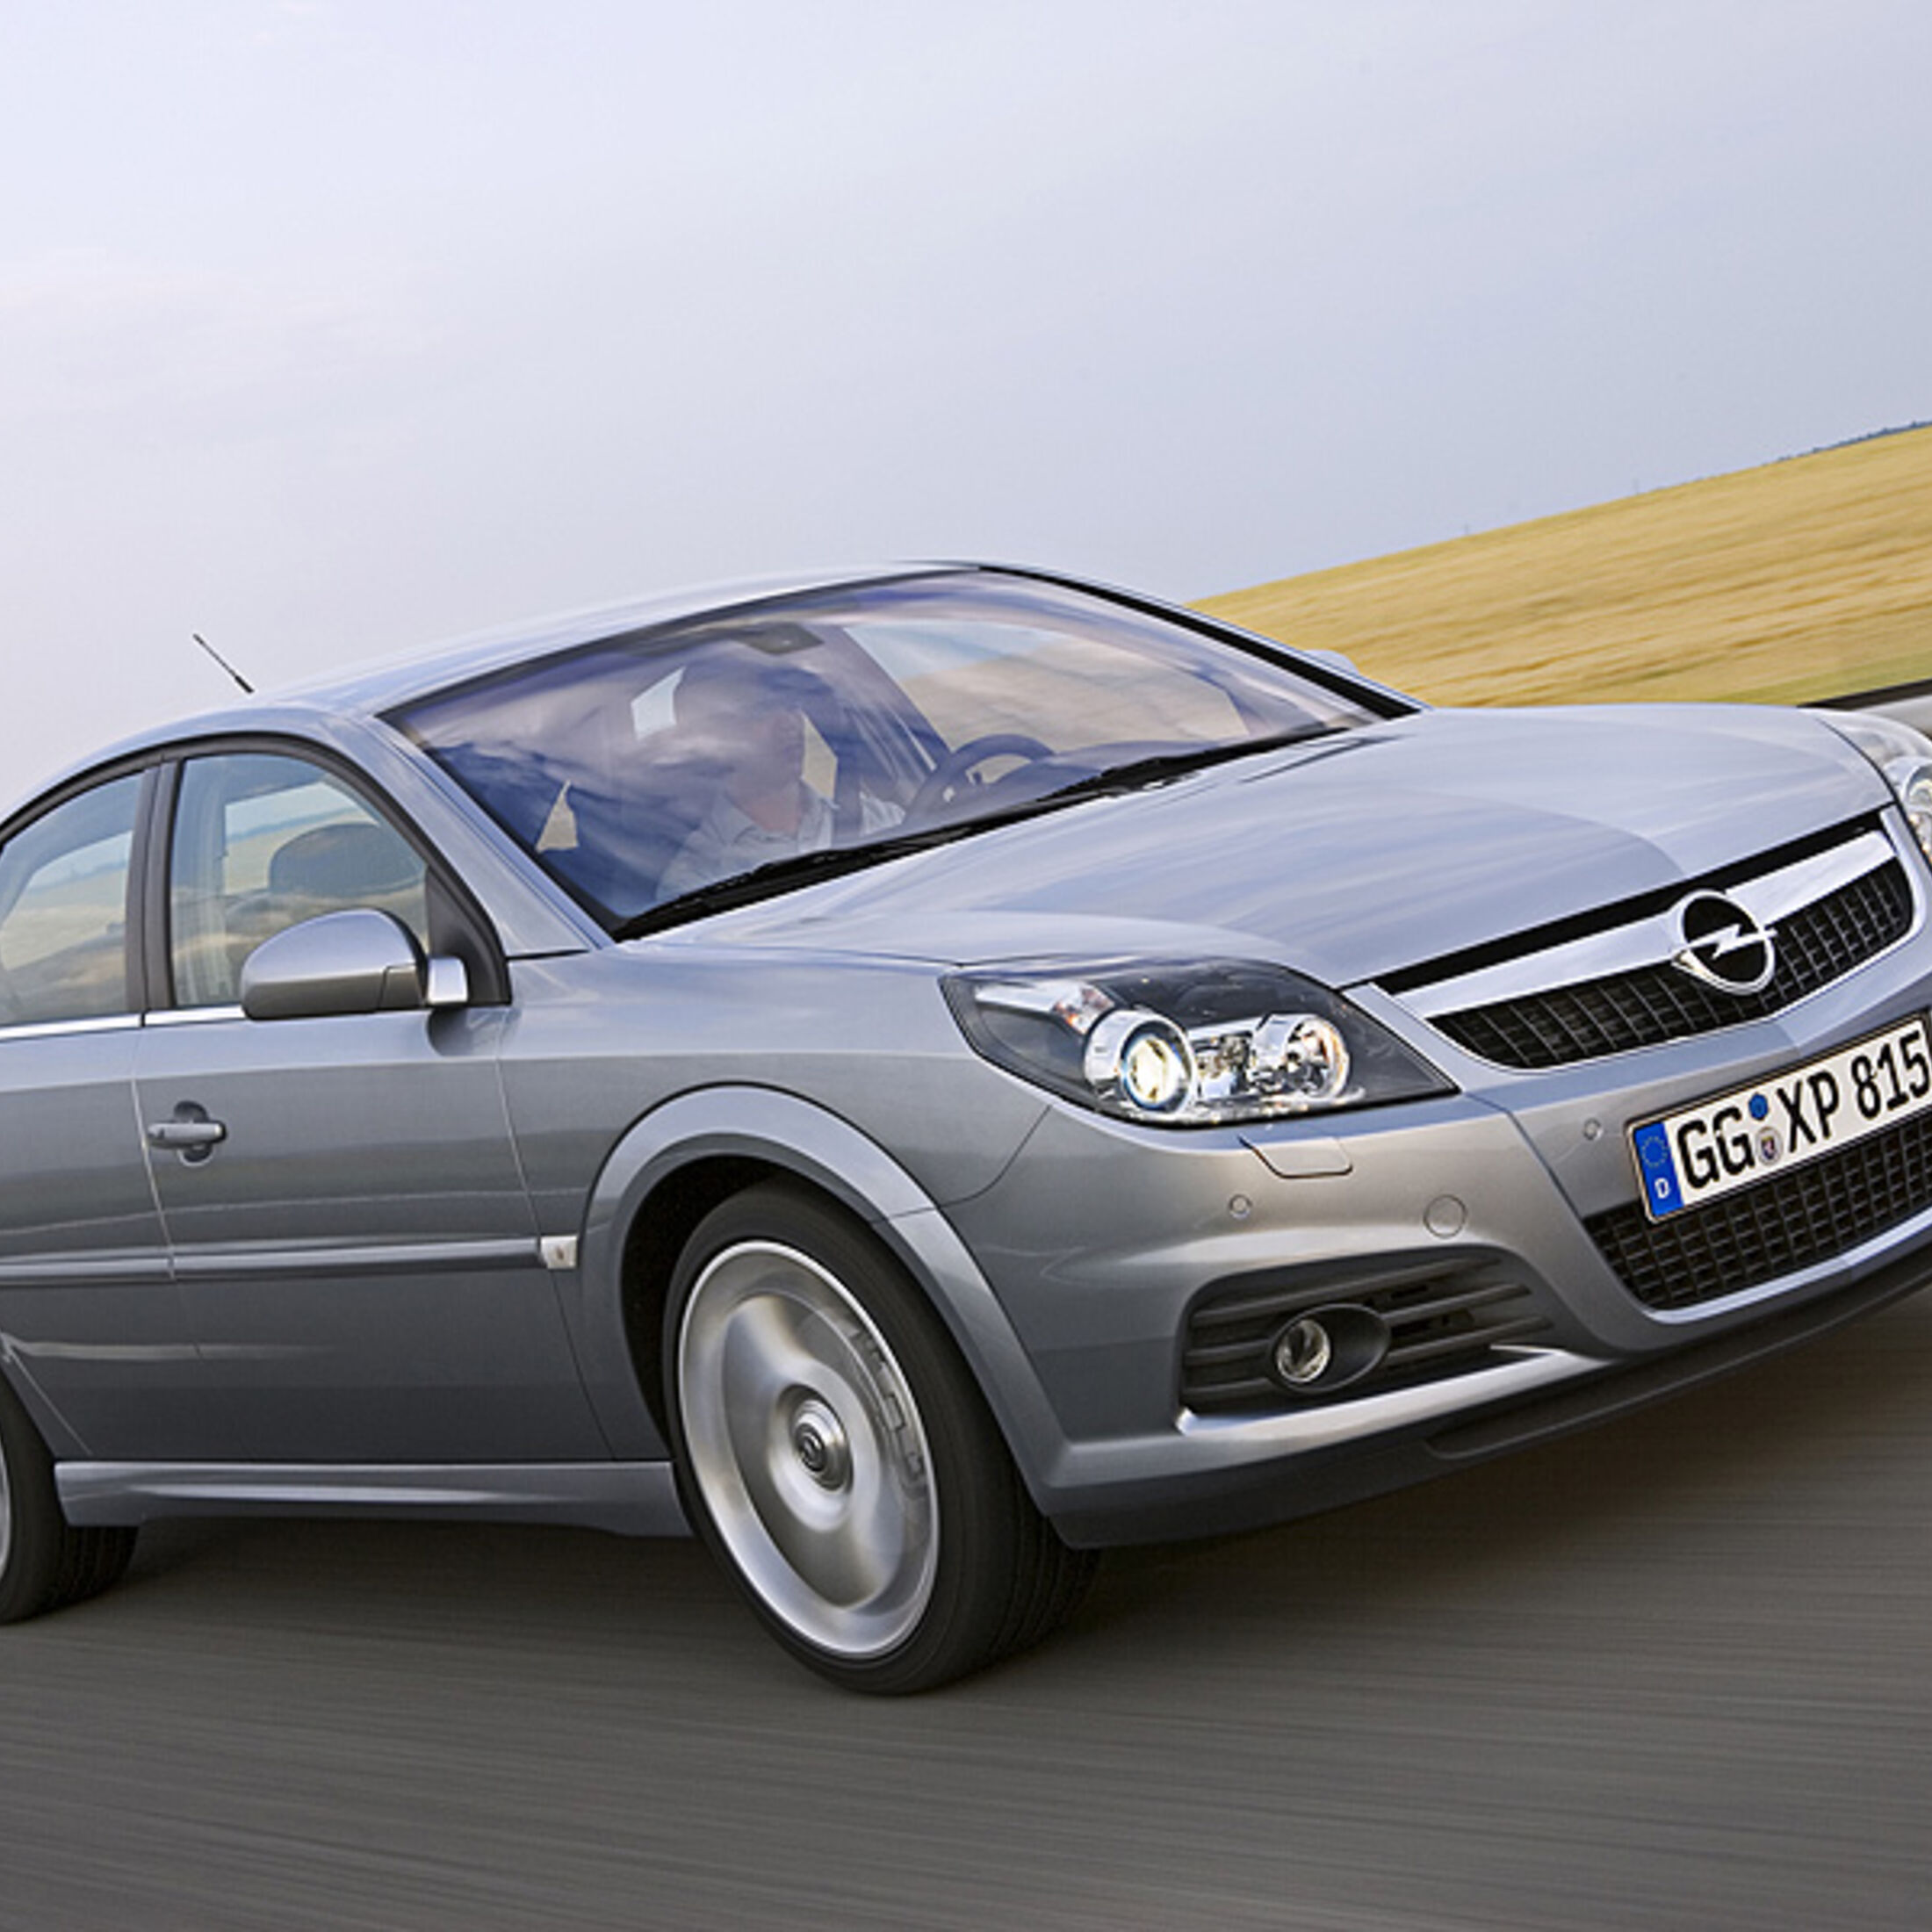 https://imgr1.auto-motor-und-sport.de/Opel-Vectra-C-GTS-jsonLd1x1-f4000fee-305337.jpg